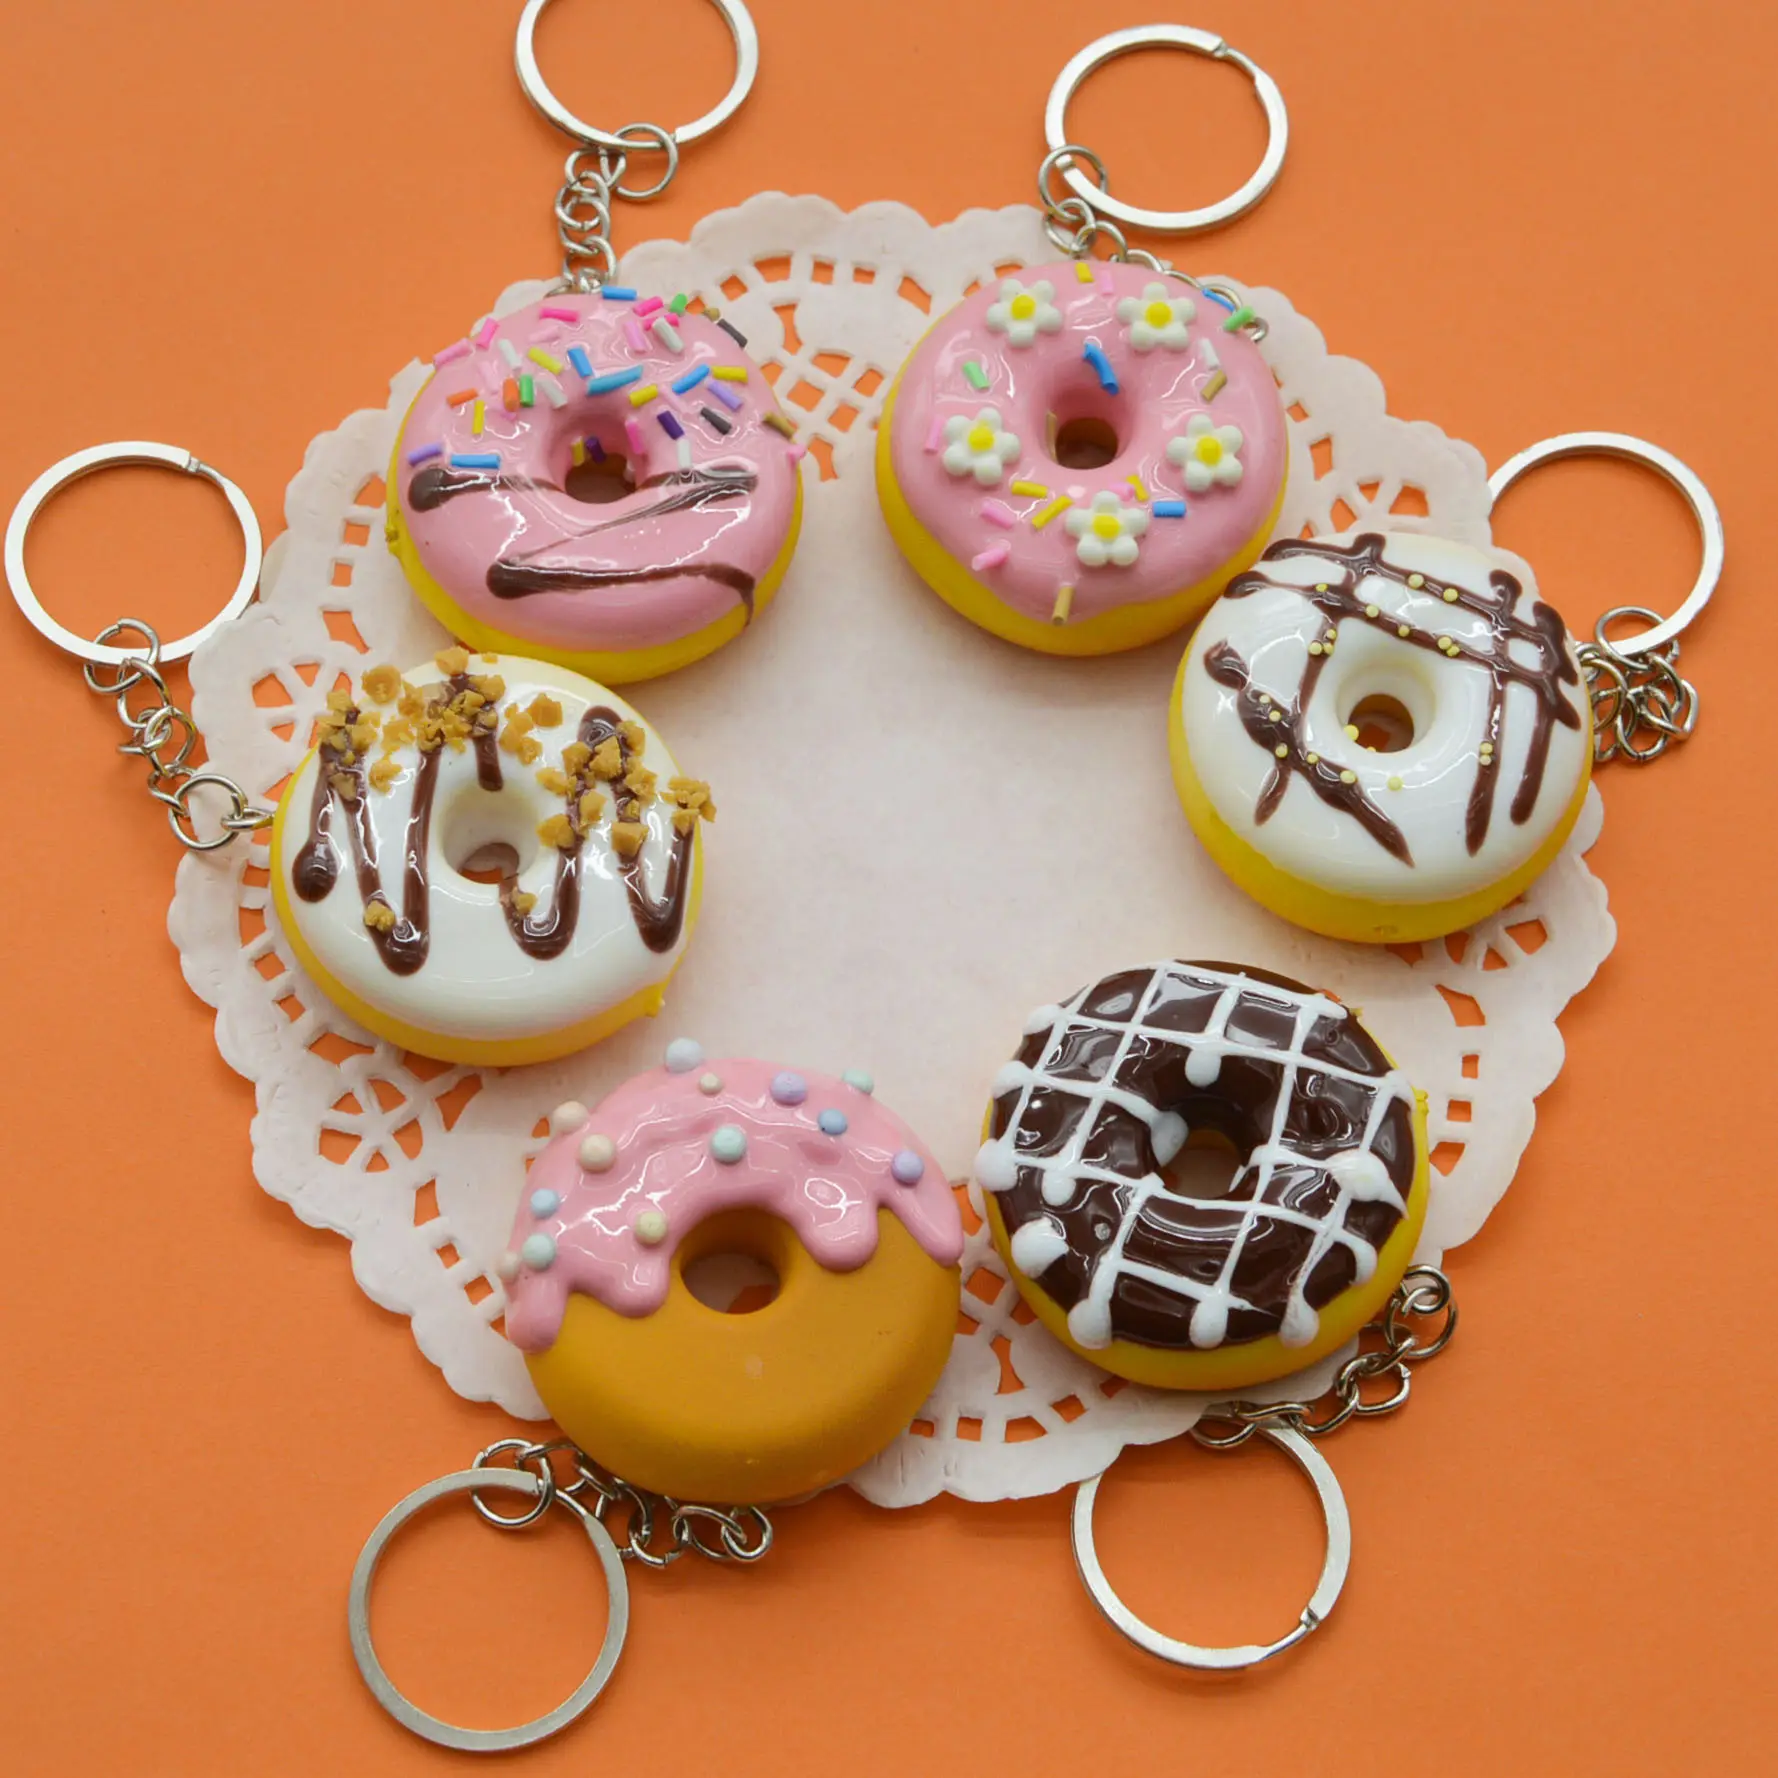 Factory direct sales simulation food play key chain dessert cake model cream gum doughnut key chain